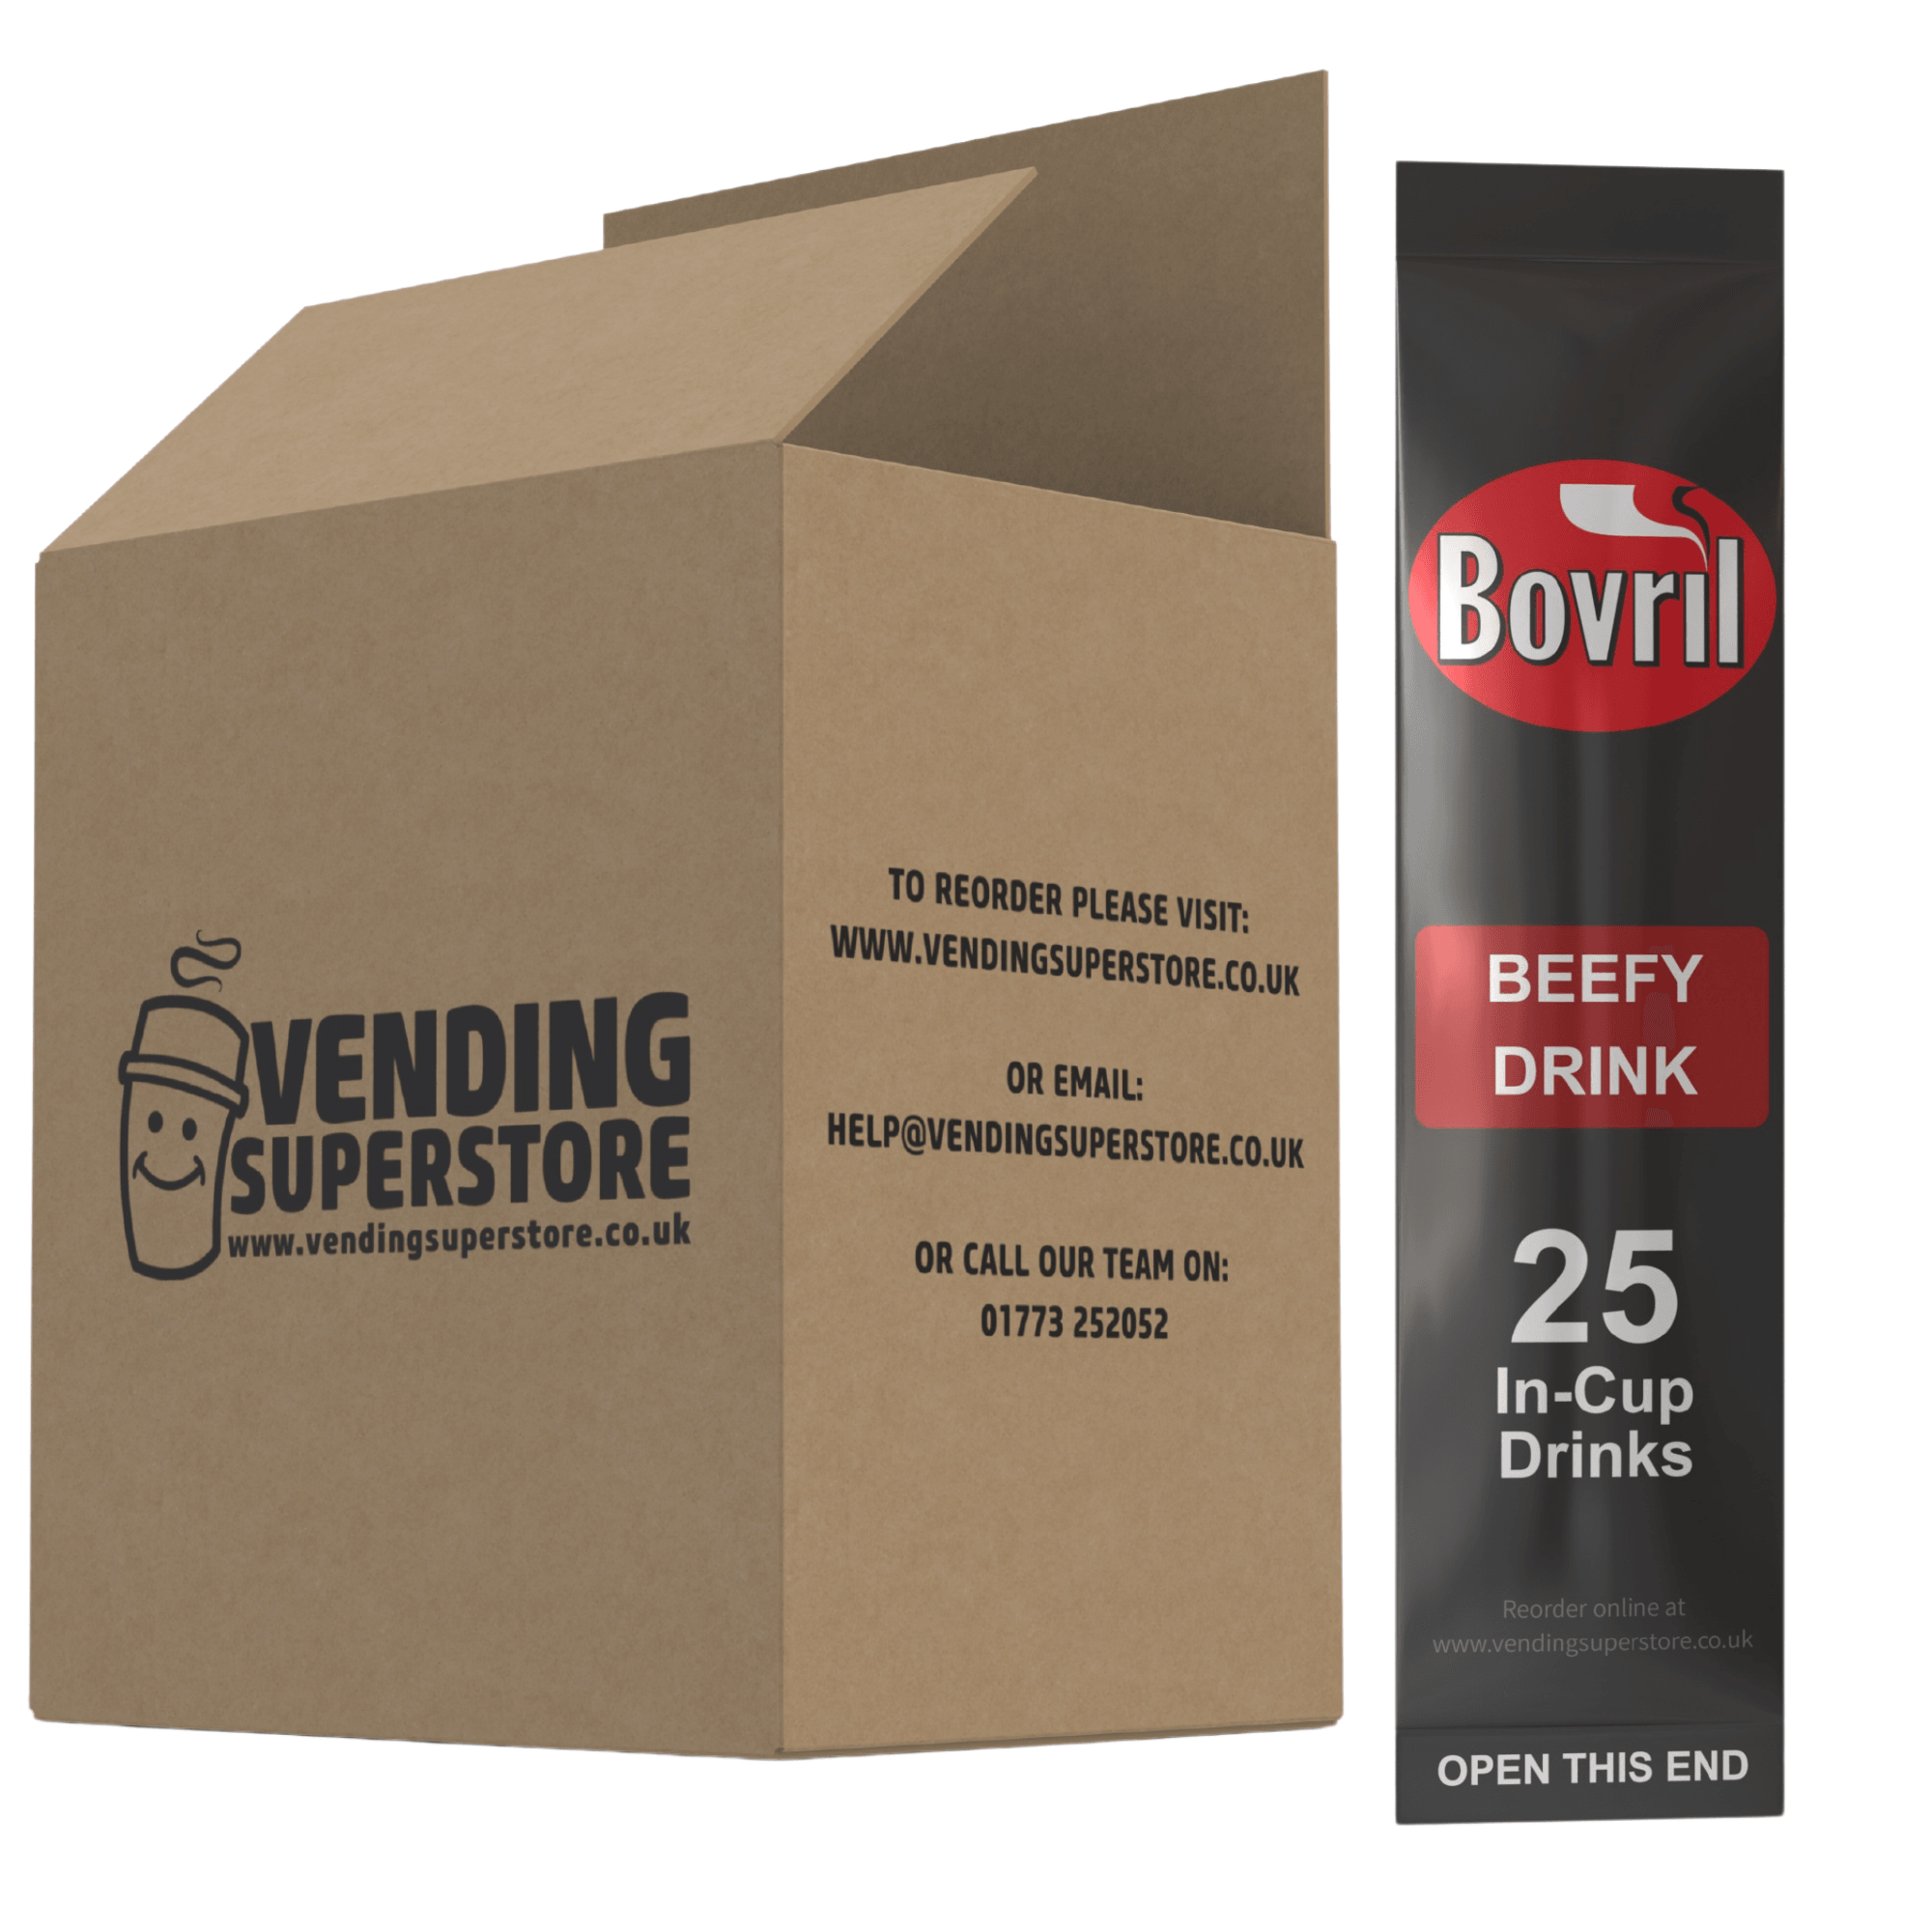 Incup Vending Drinks - Bovril Beefy Drink - Case Of 300 Cups - Vending Superstore